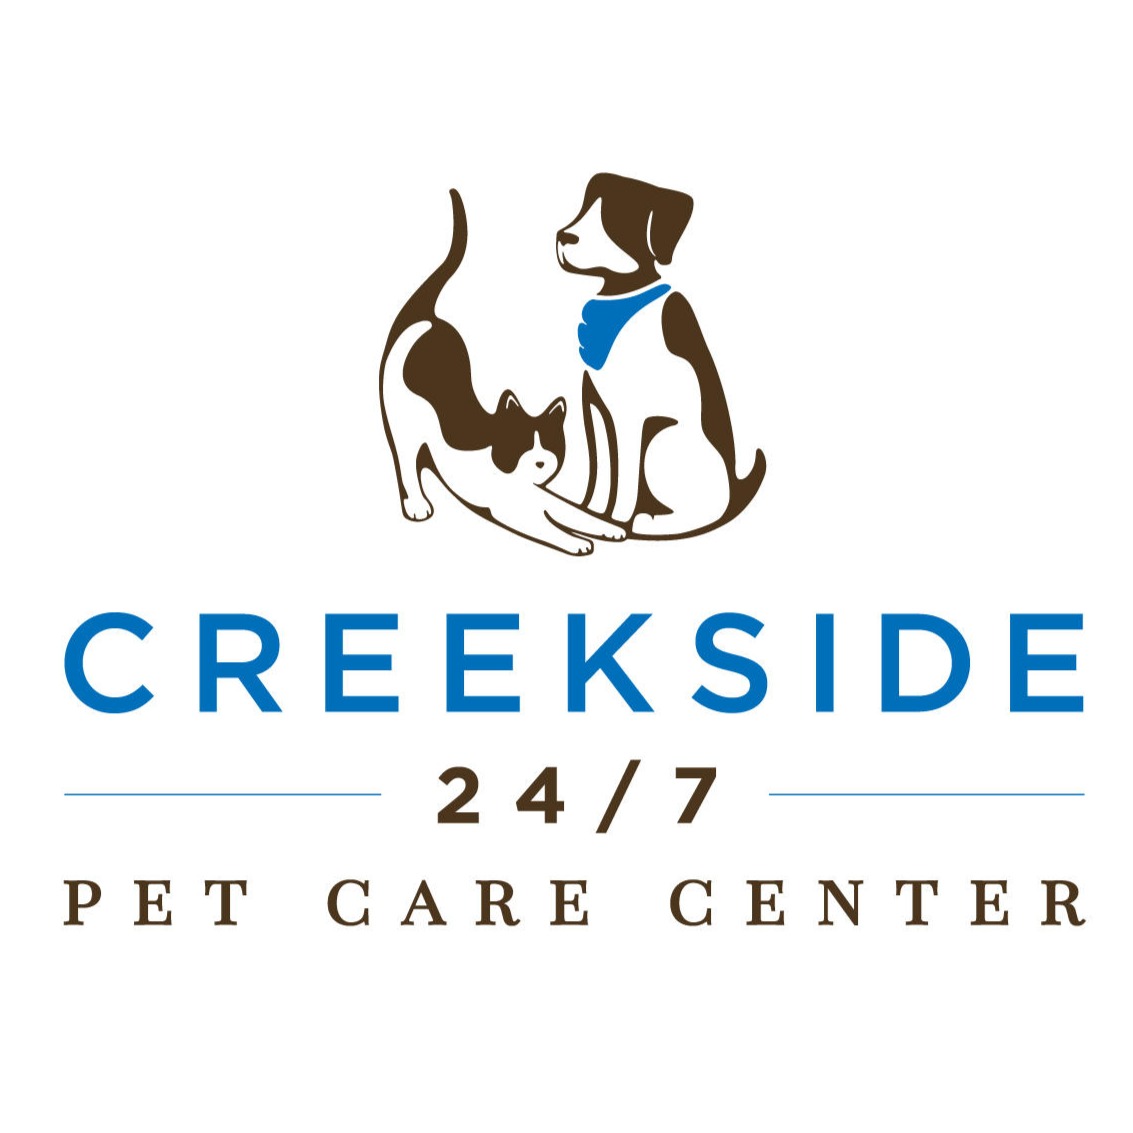 Creekside Pet Care Center Logo